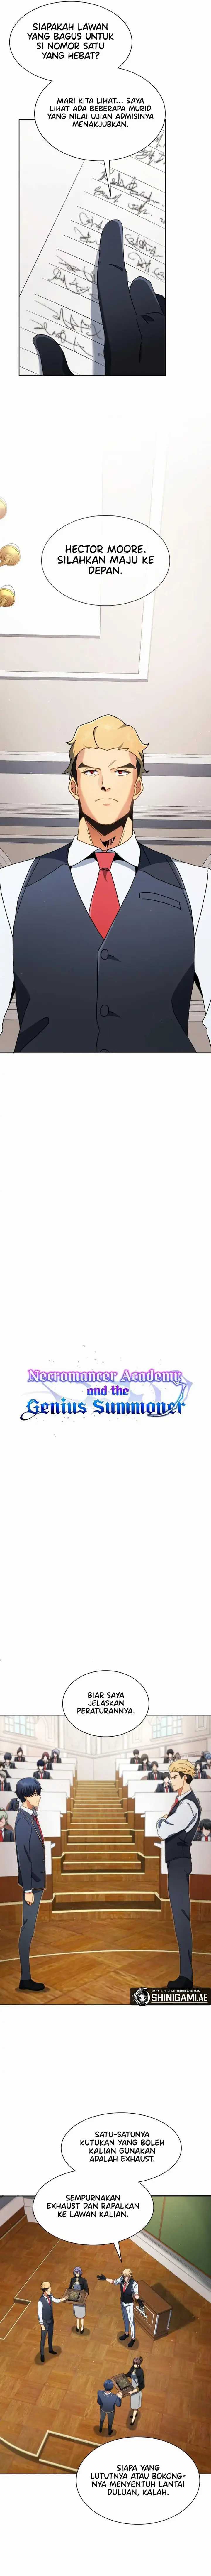 Necromancer Academy’s Genius Summoner Chapter 09